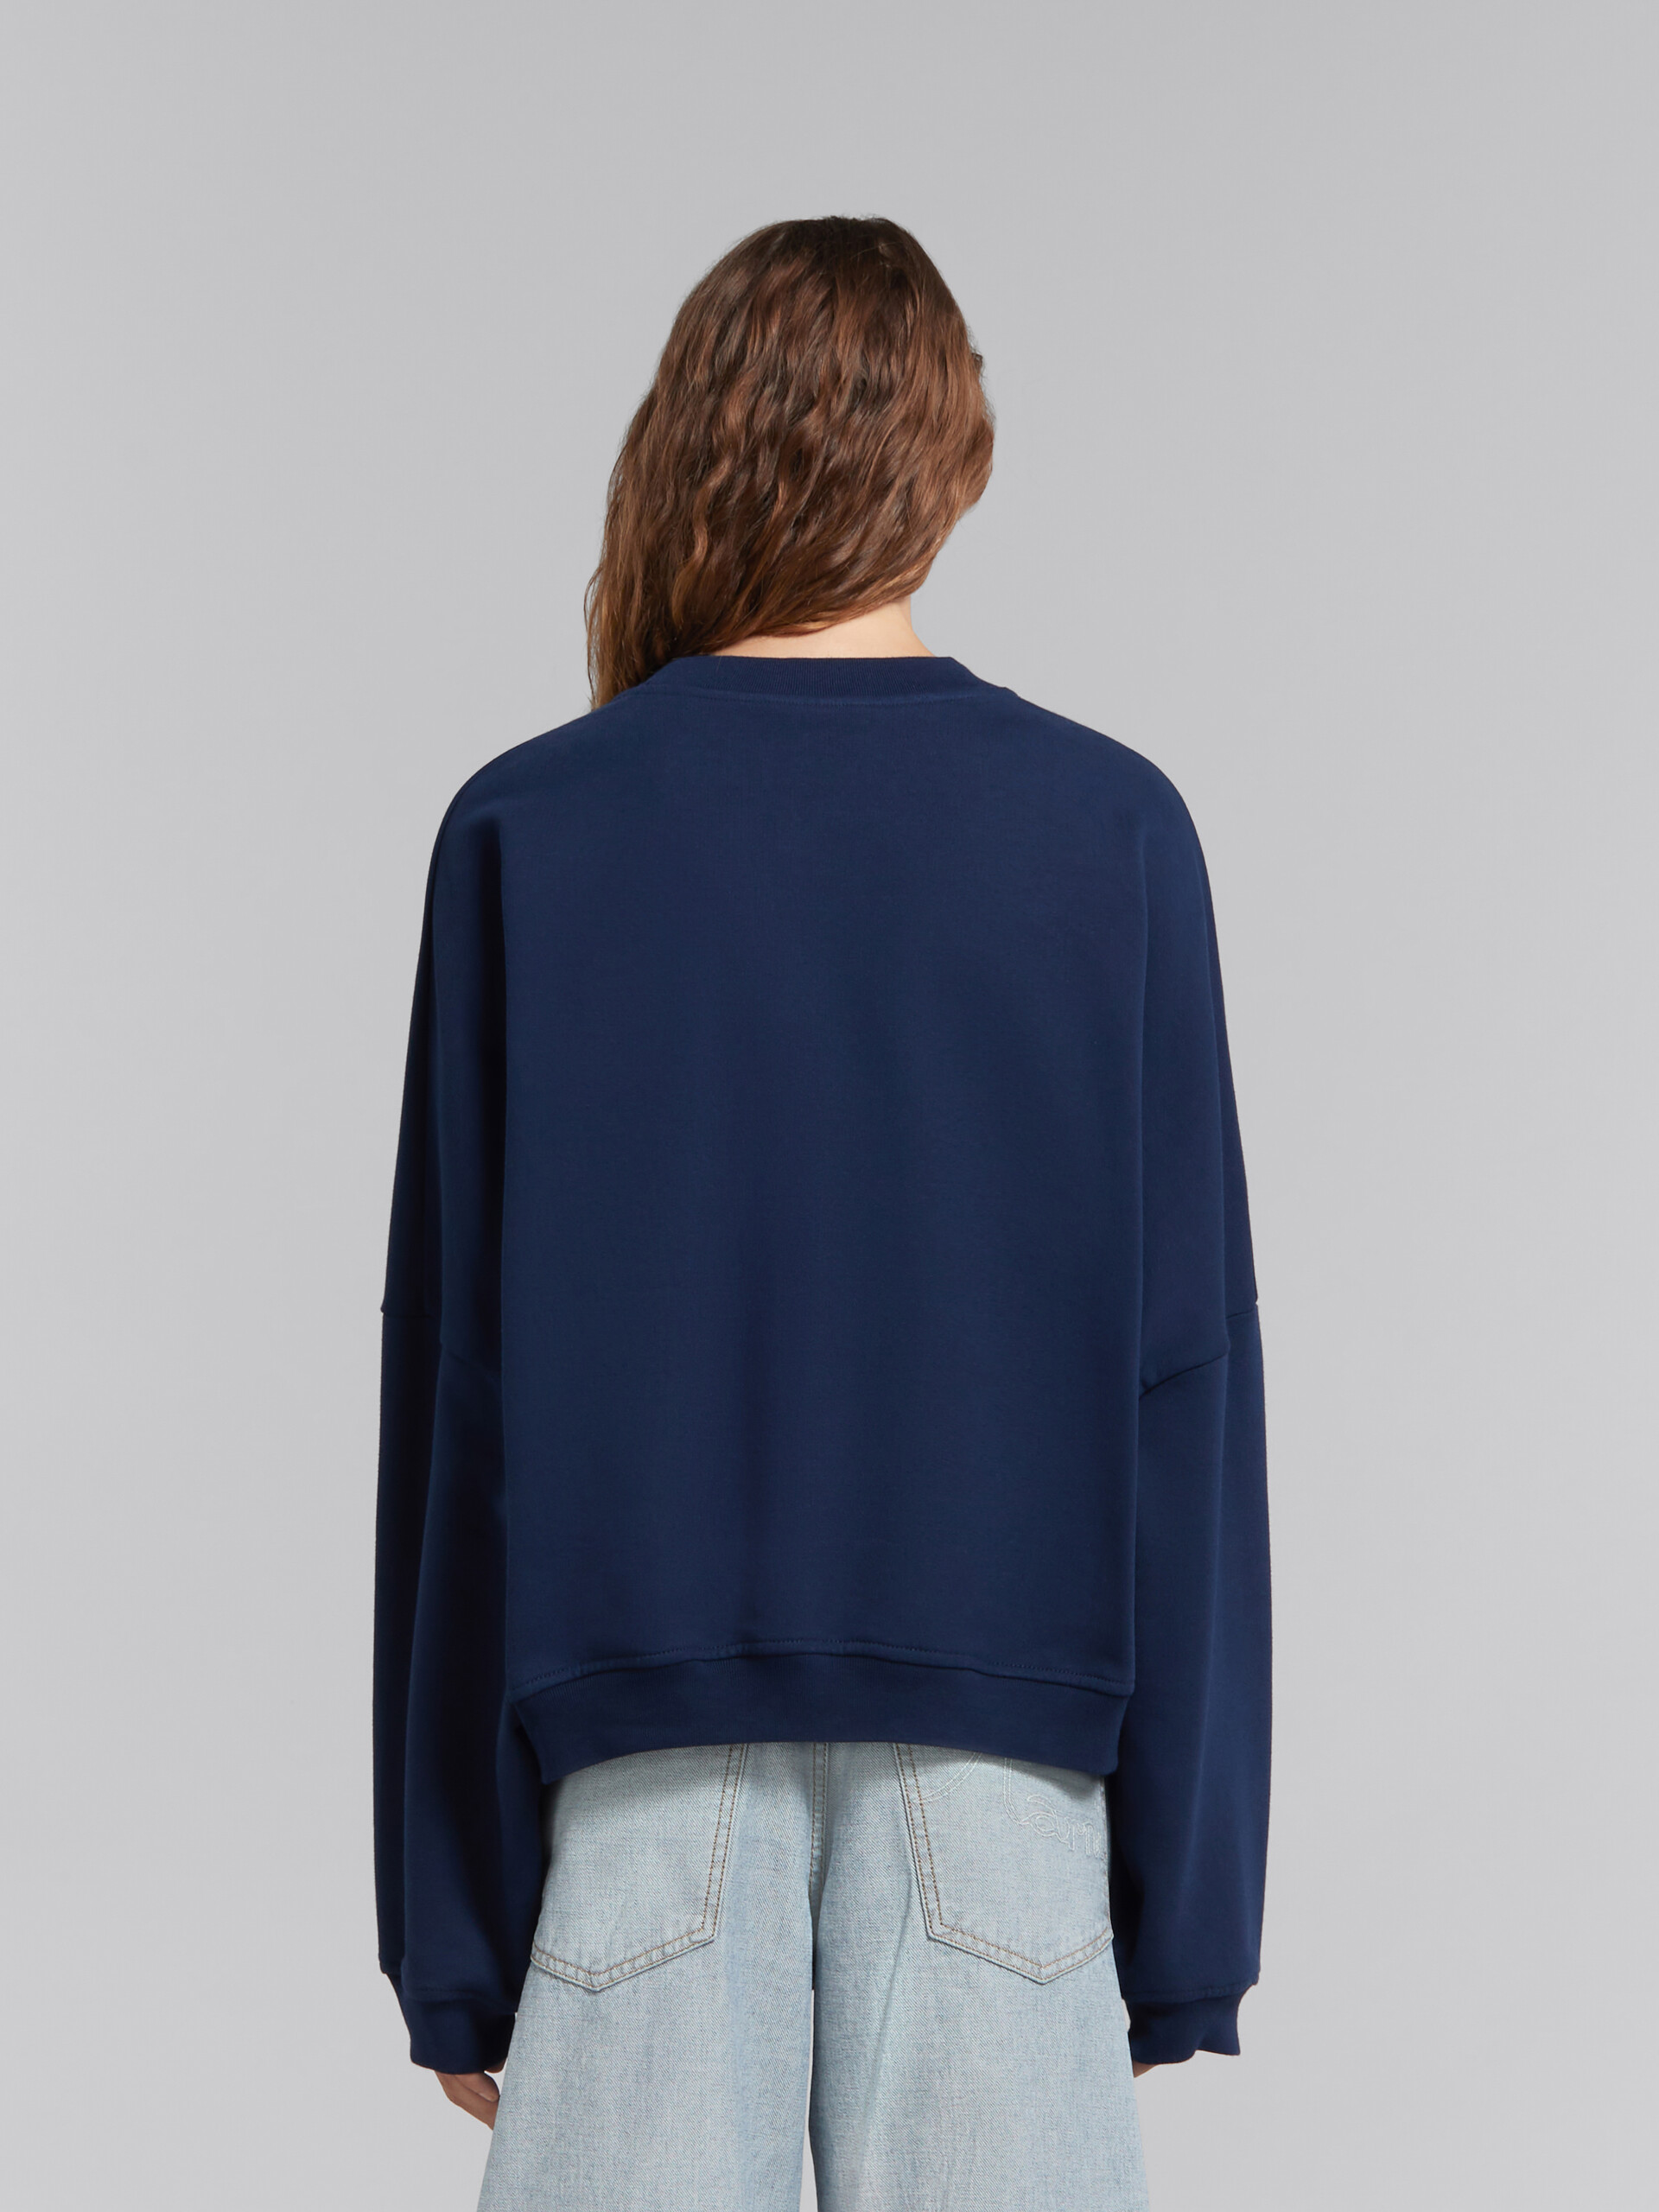 Blue organic cotton sweatshirt with Marni print - Pullovers - Image 3